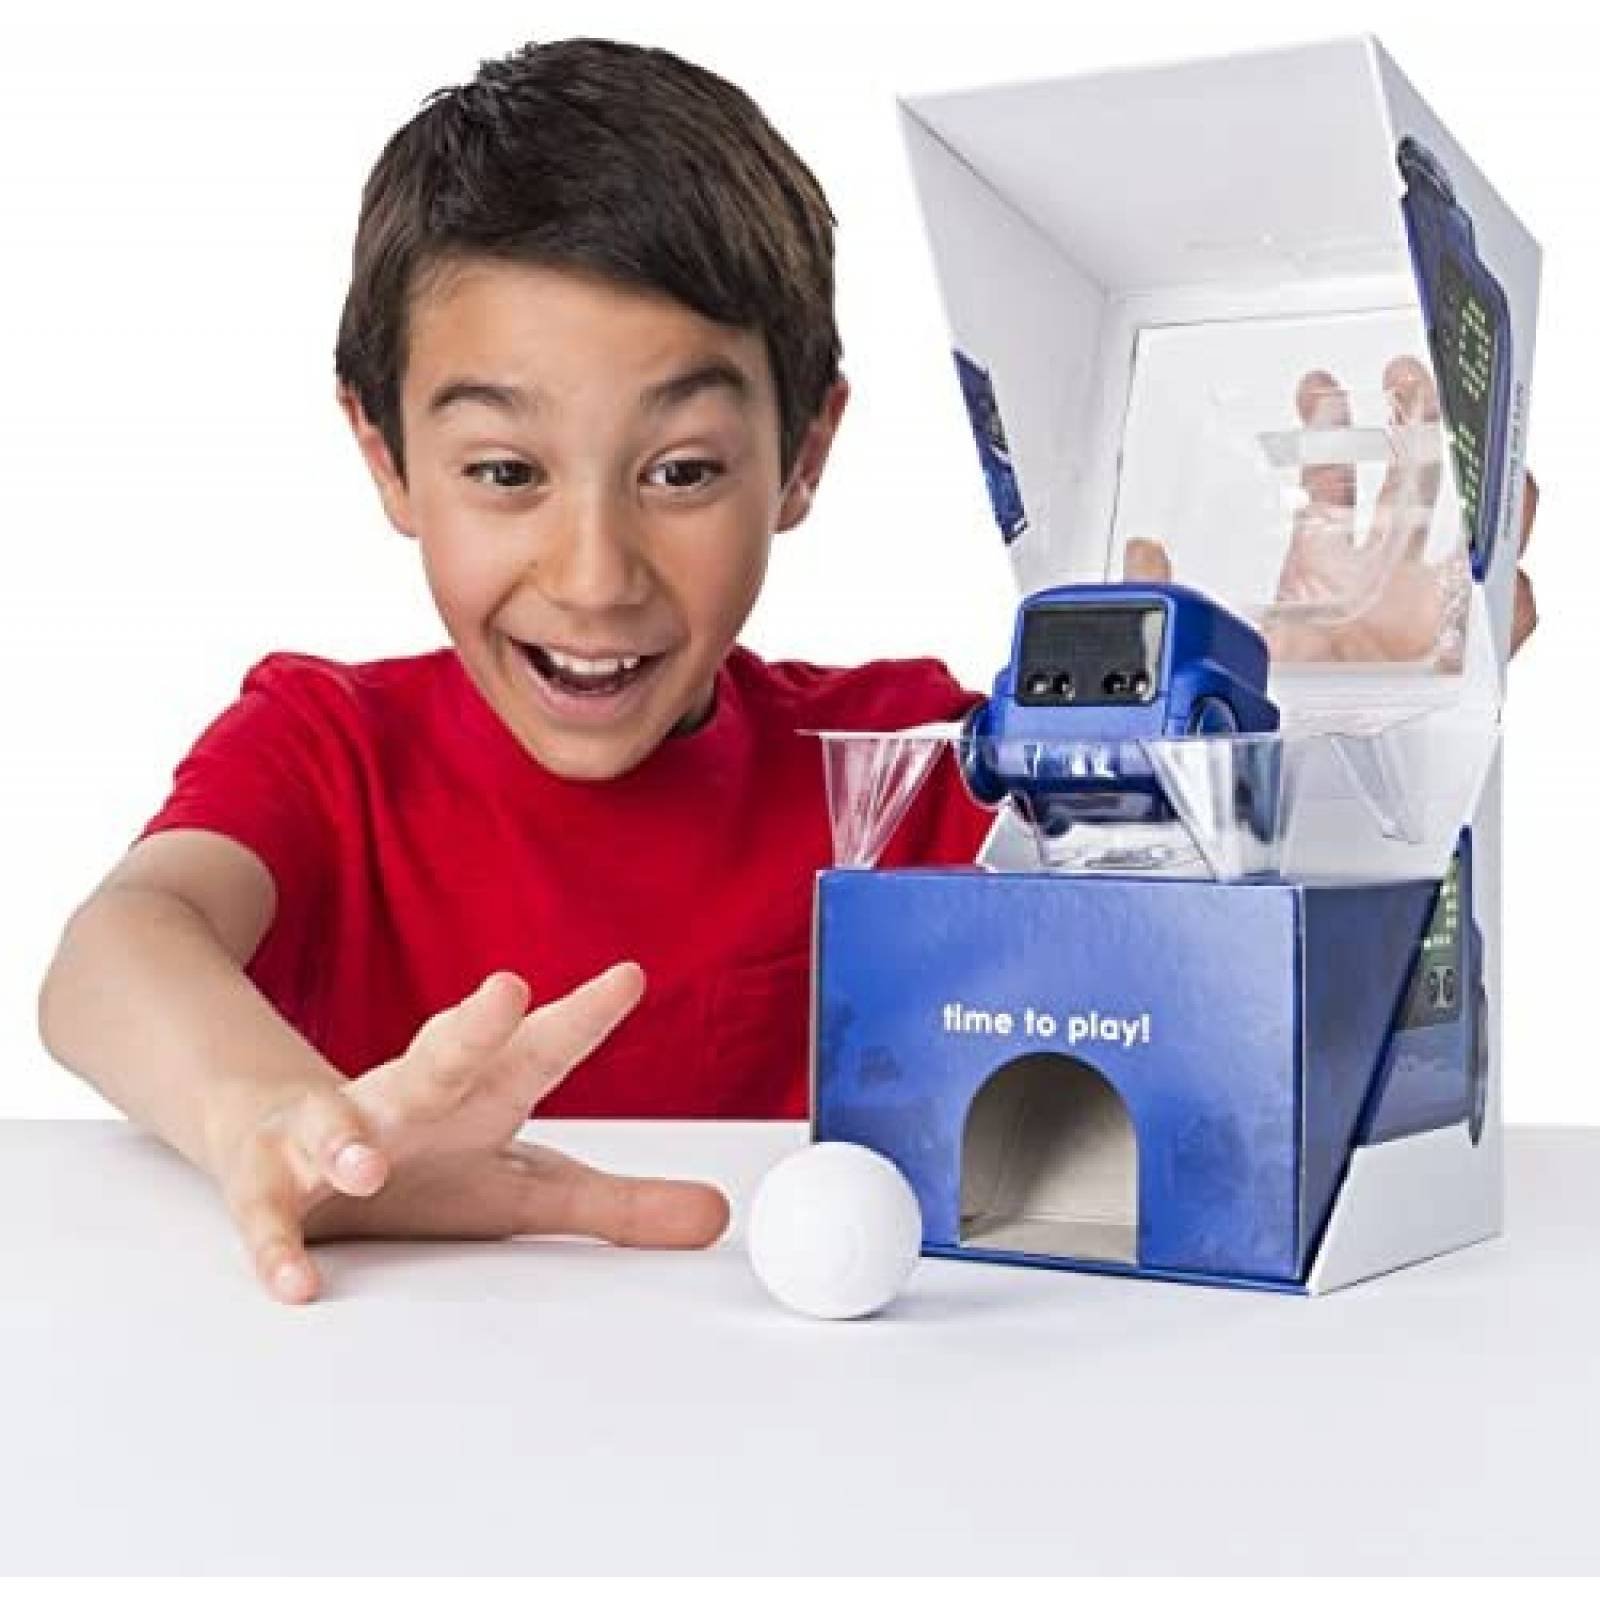 Robot de Juguete Boxer con Control Remoto para Niños -Azul